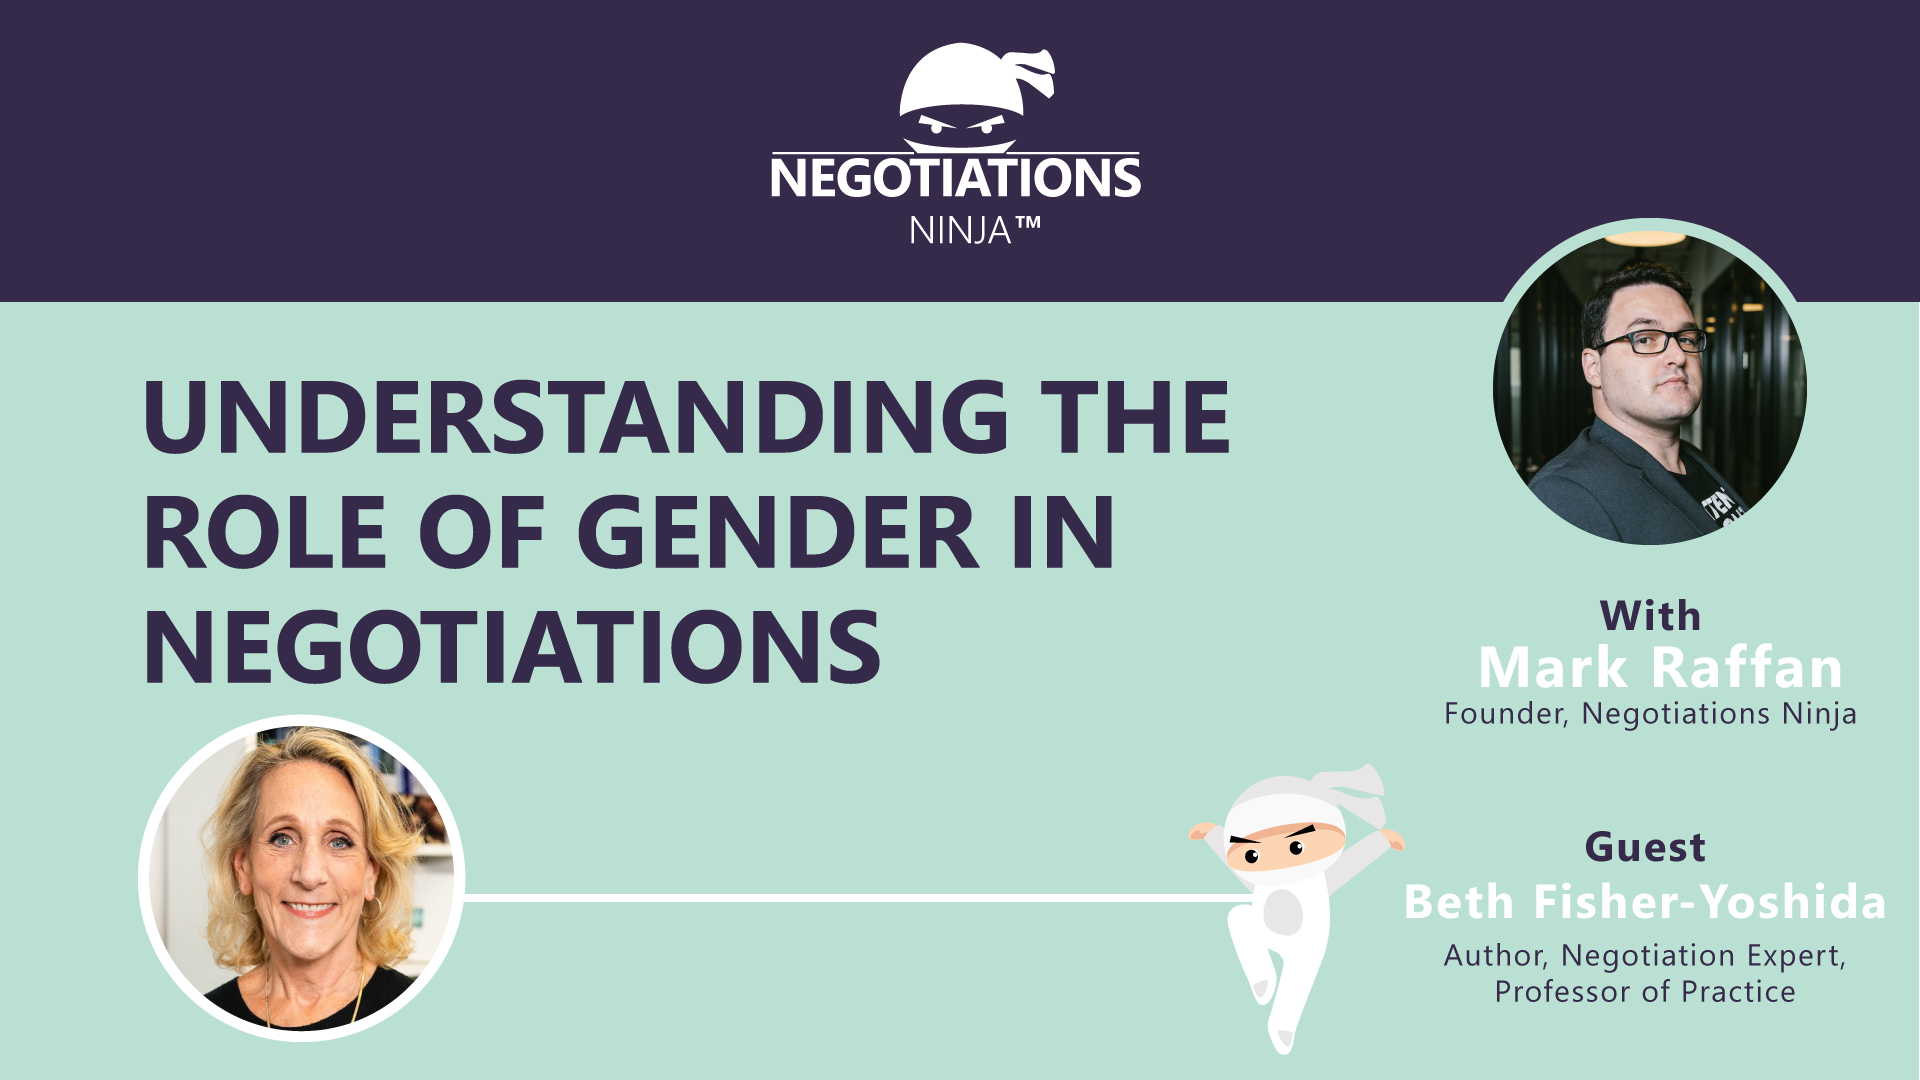 Gender in Negotiations